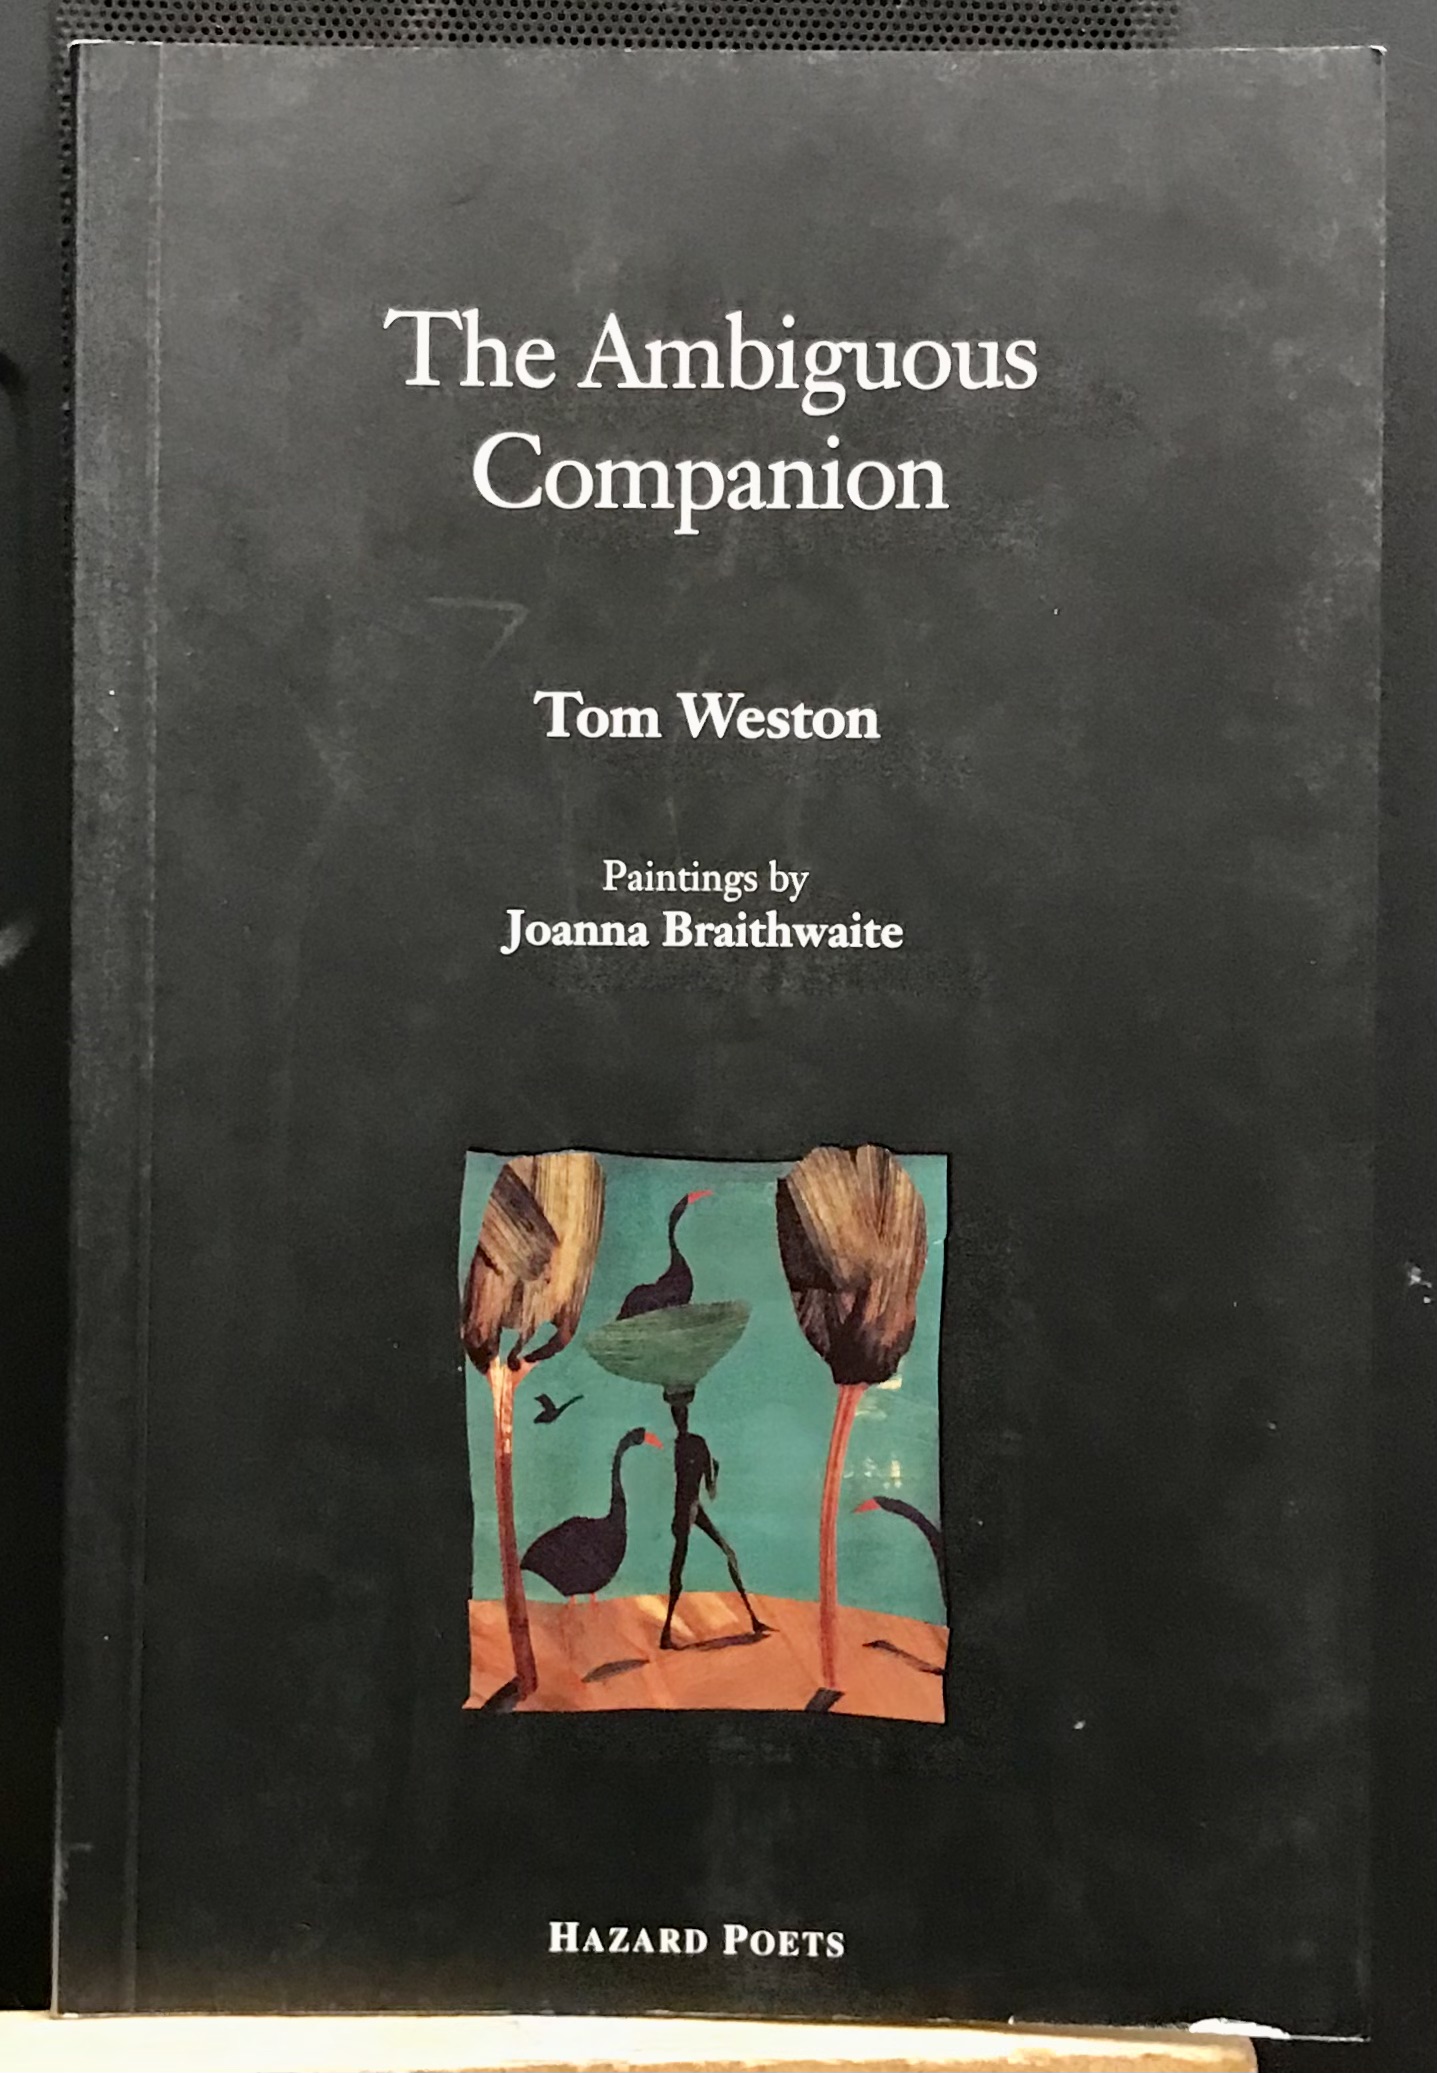 The Ambiguous Companion - Weston, Tom and Braithwaite, Joanna (artist)